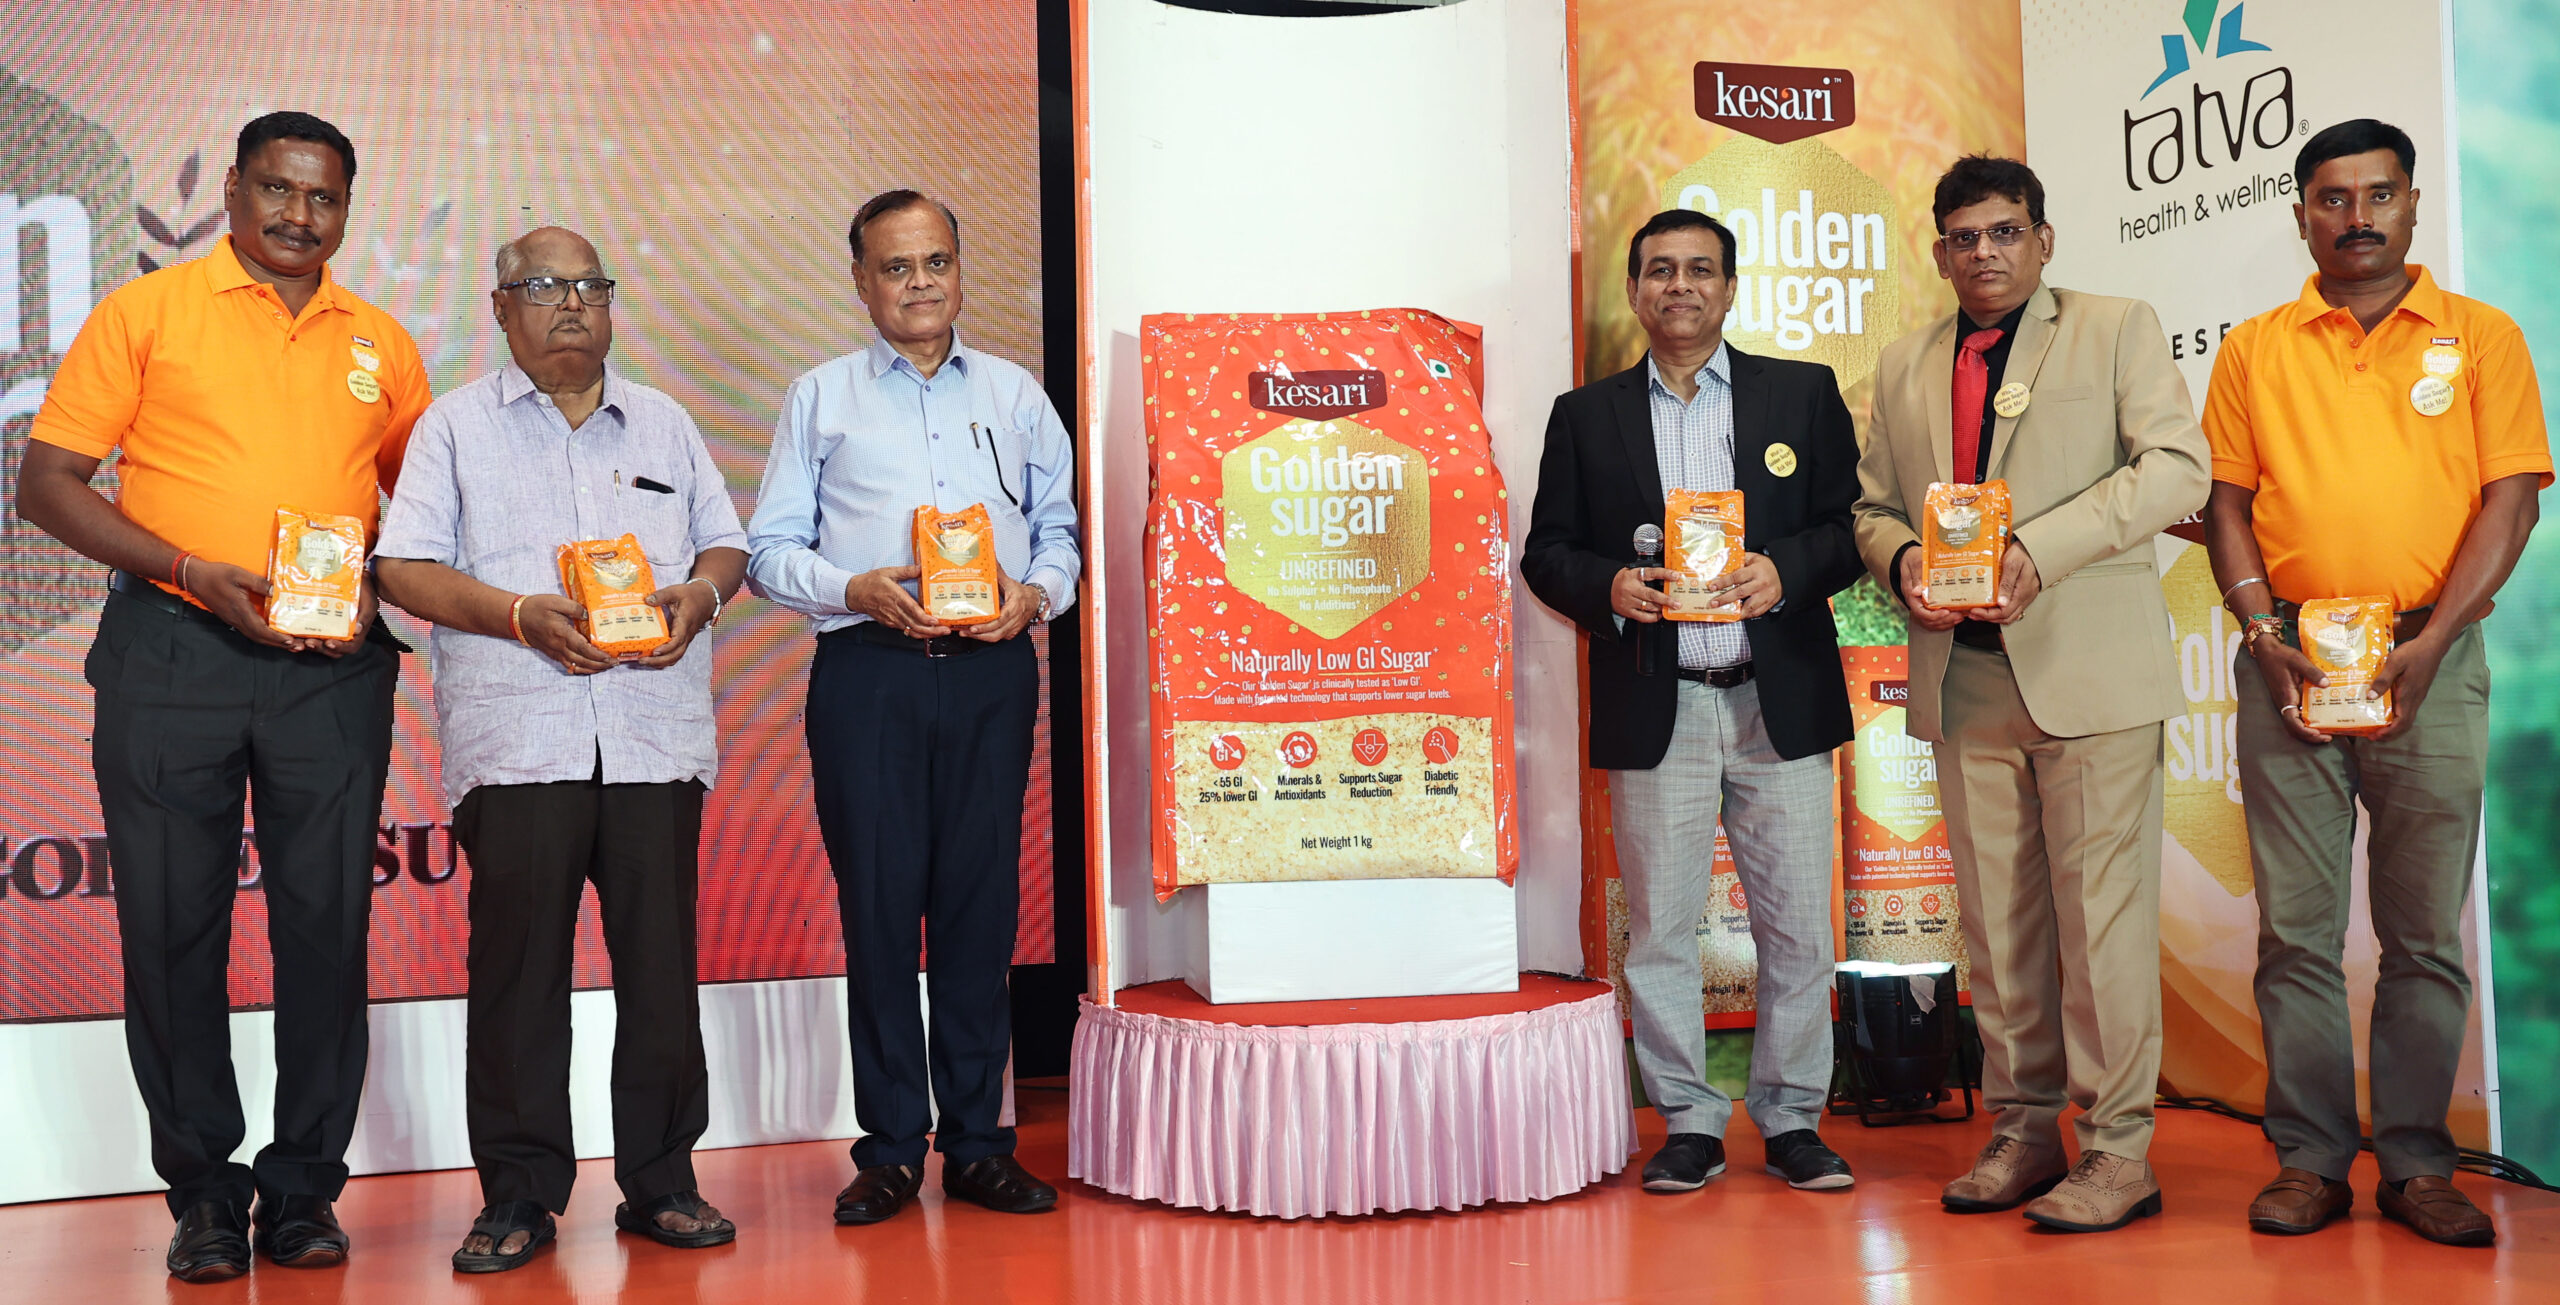 Kesari Golden Sugar’ in Chennai-indiastarsnow.com